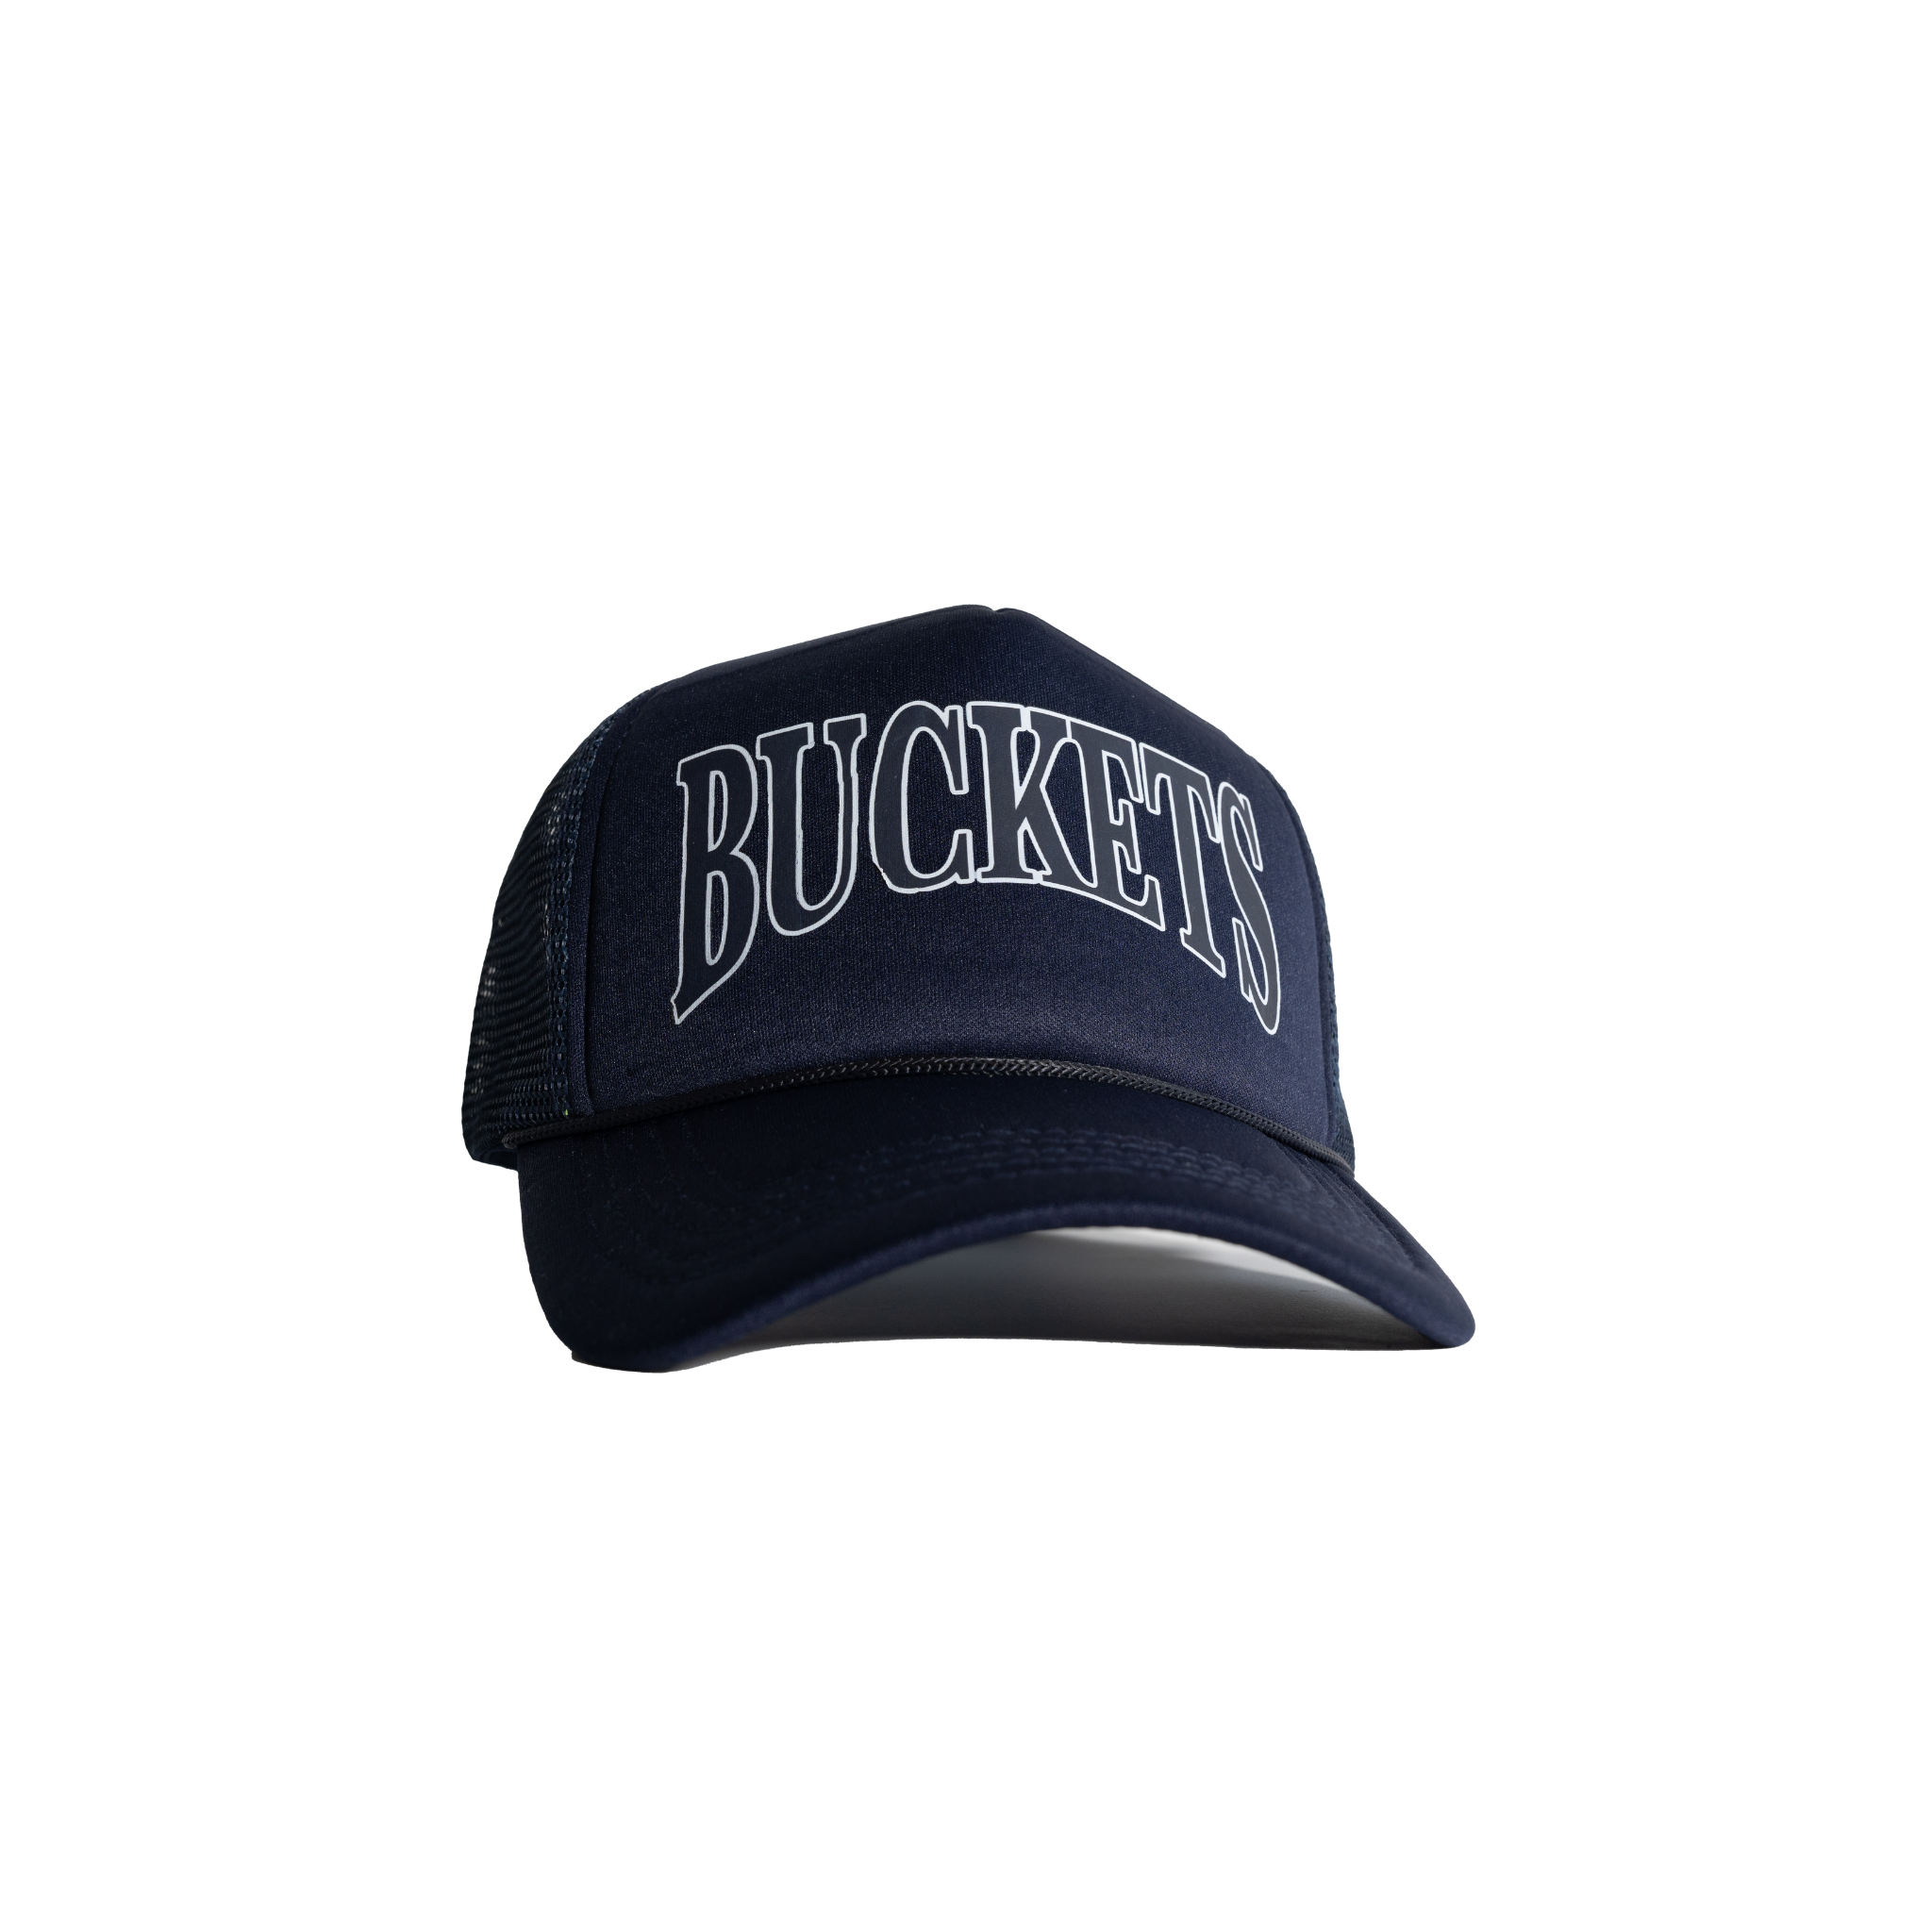 BUCKETS ACADEMY® Trucker Hat